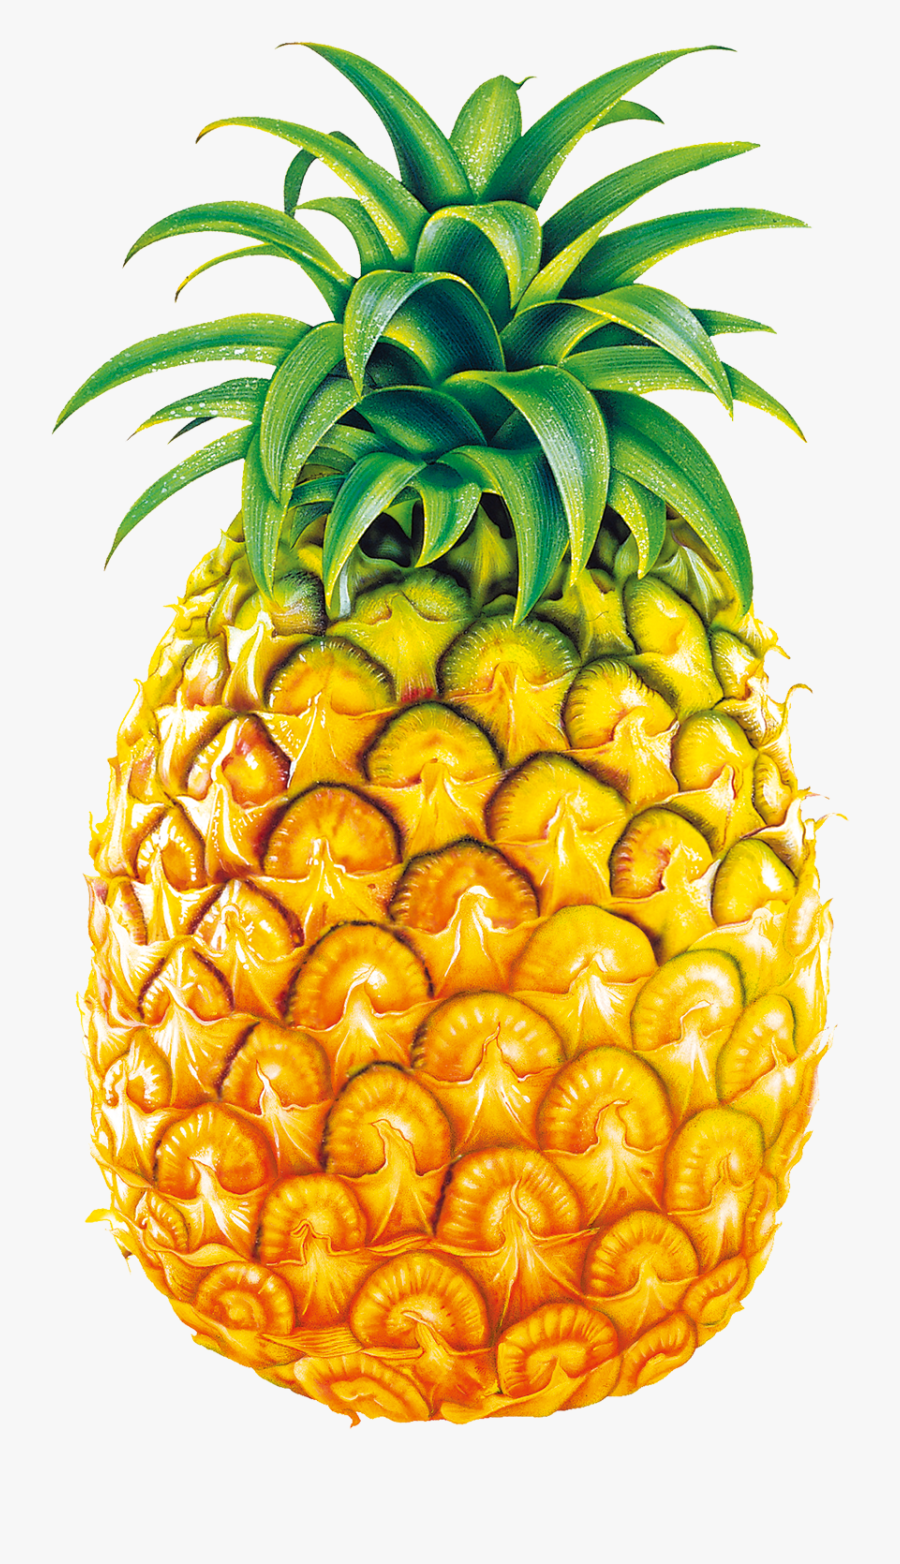 Pineapple Juice Fruit Bromelain - Legend Of Pineapple Summary, Transparent Clipart